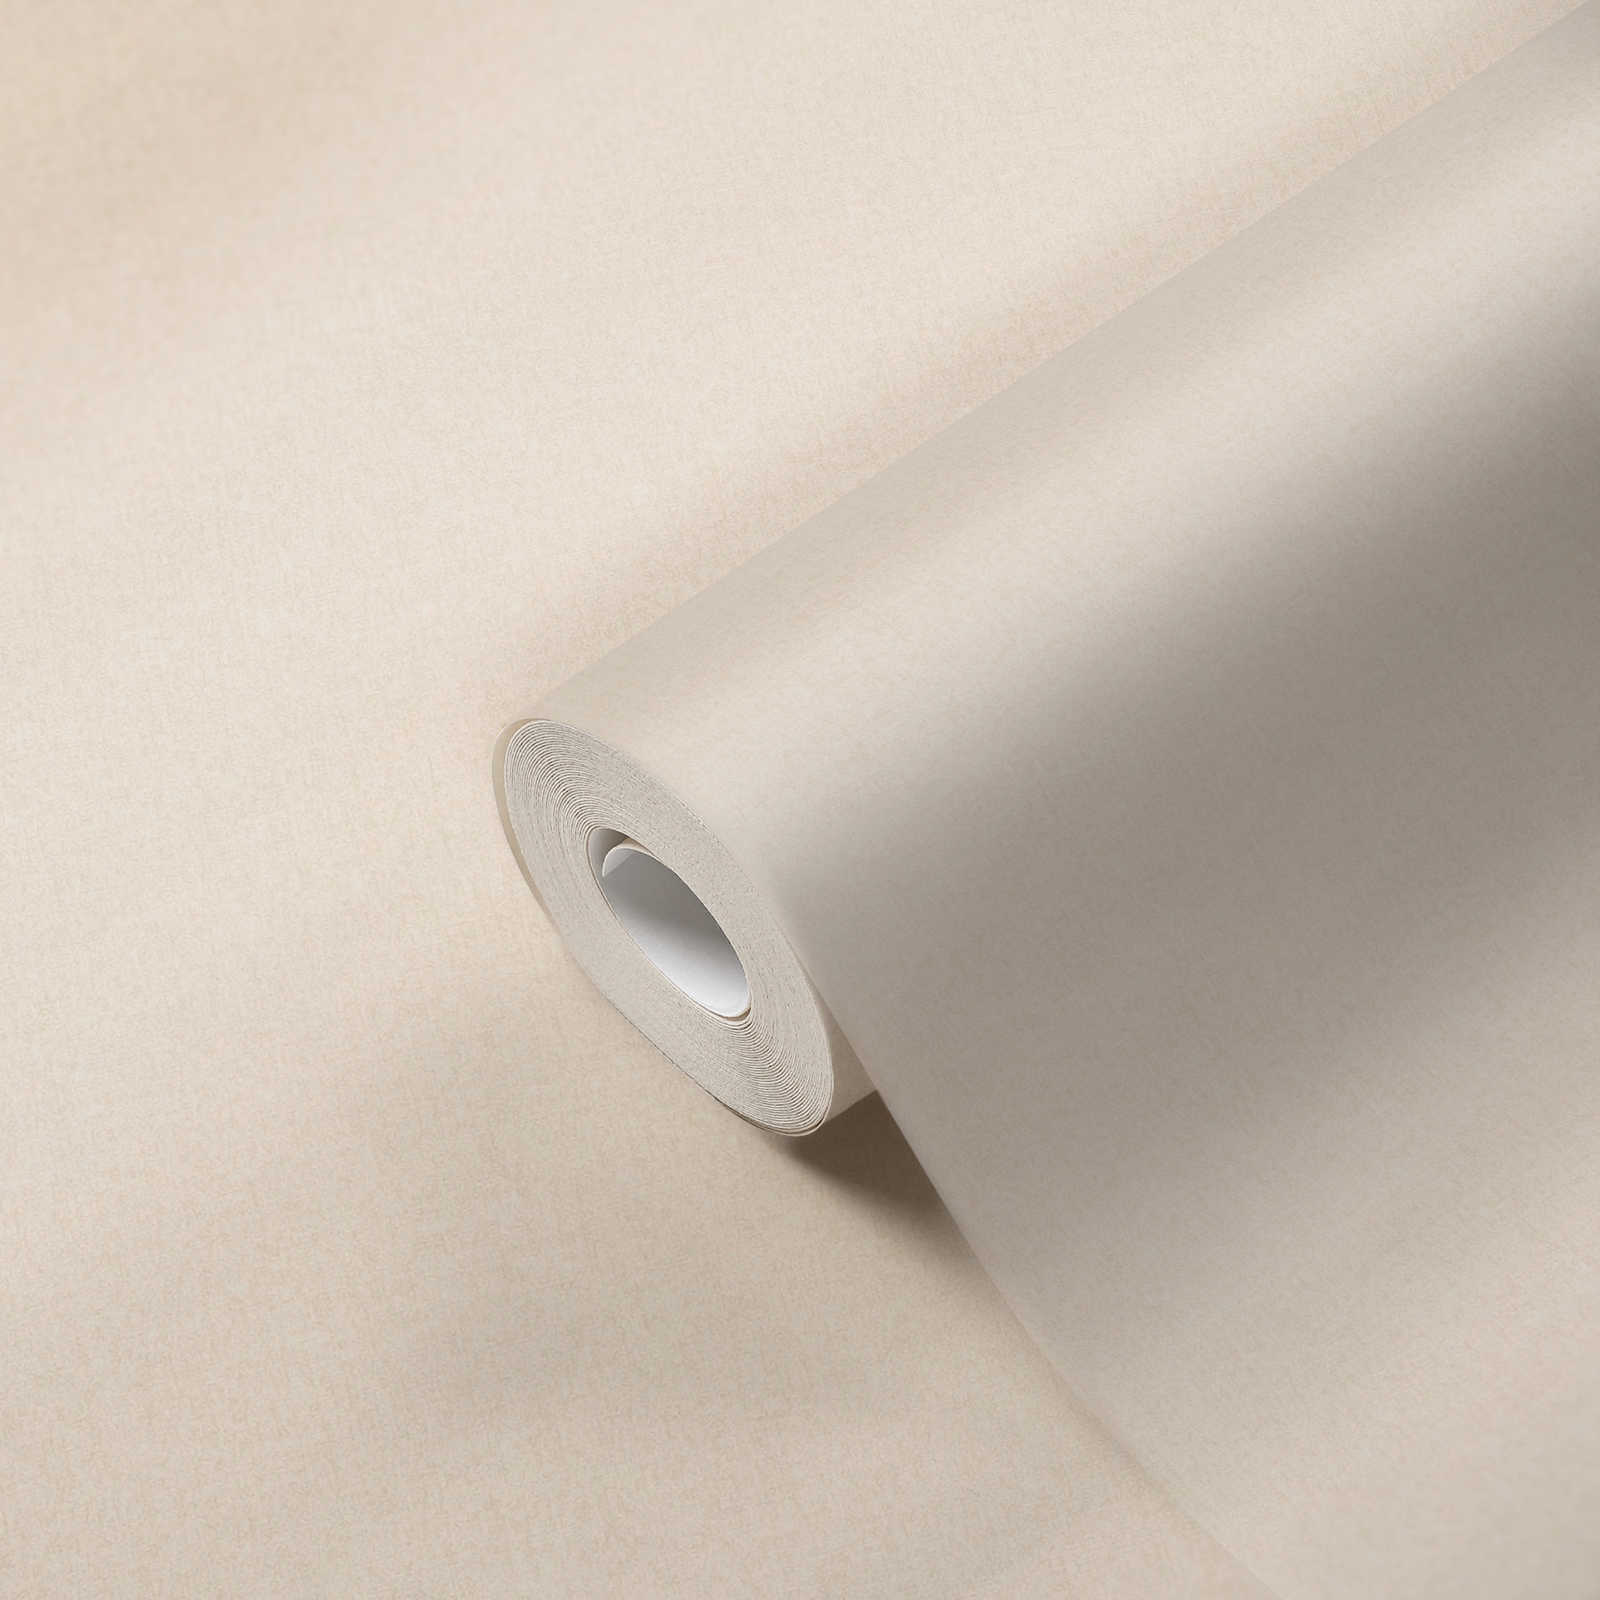             Discreet plain wallpaper with fine structure - cream
        